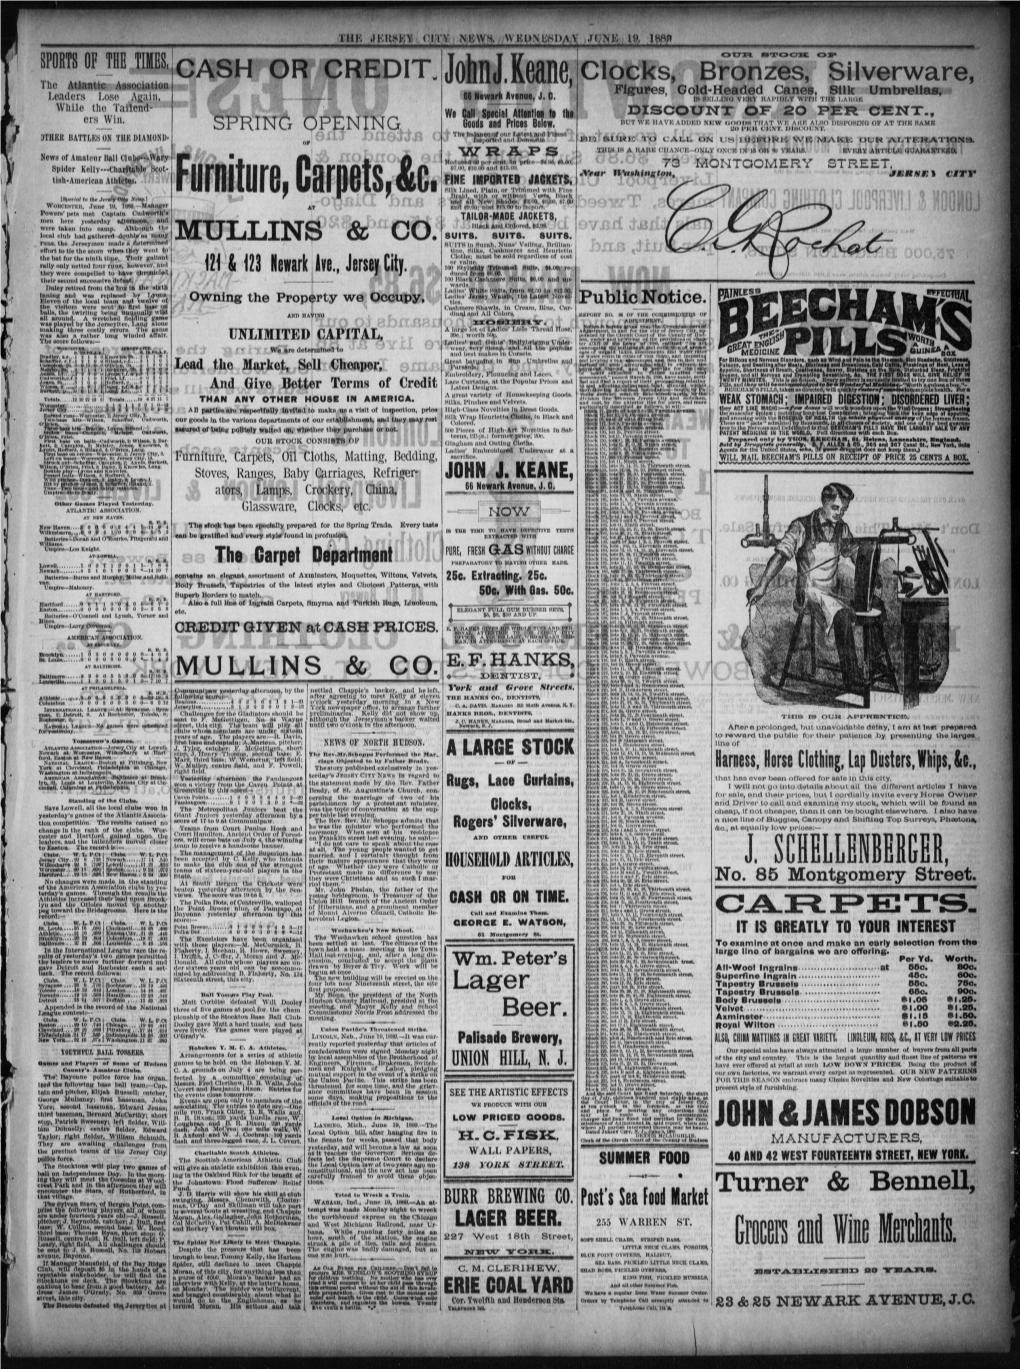 Jersey City News (Jersey City, N.J.). 1889-06-19 [P ]